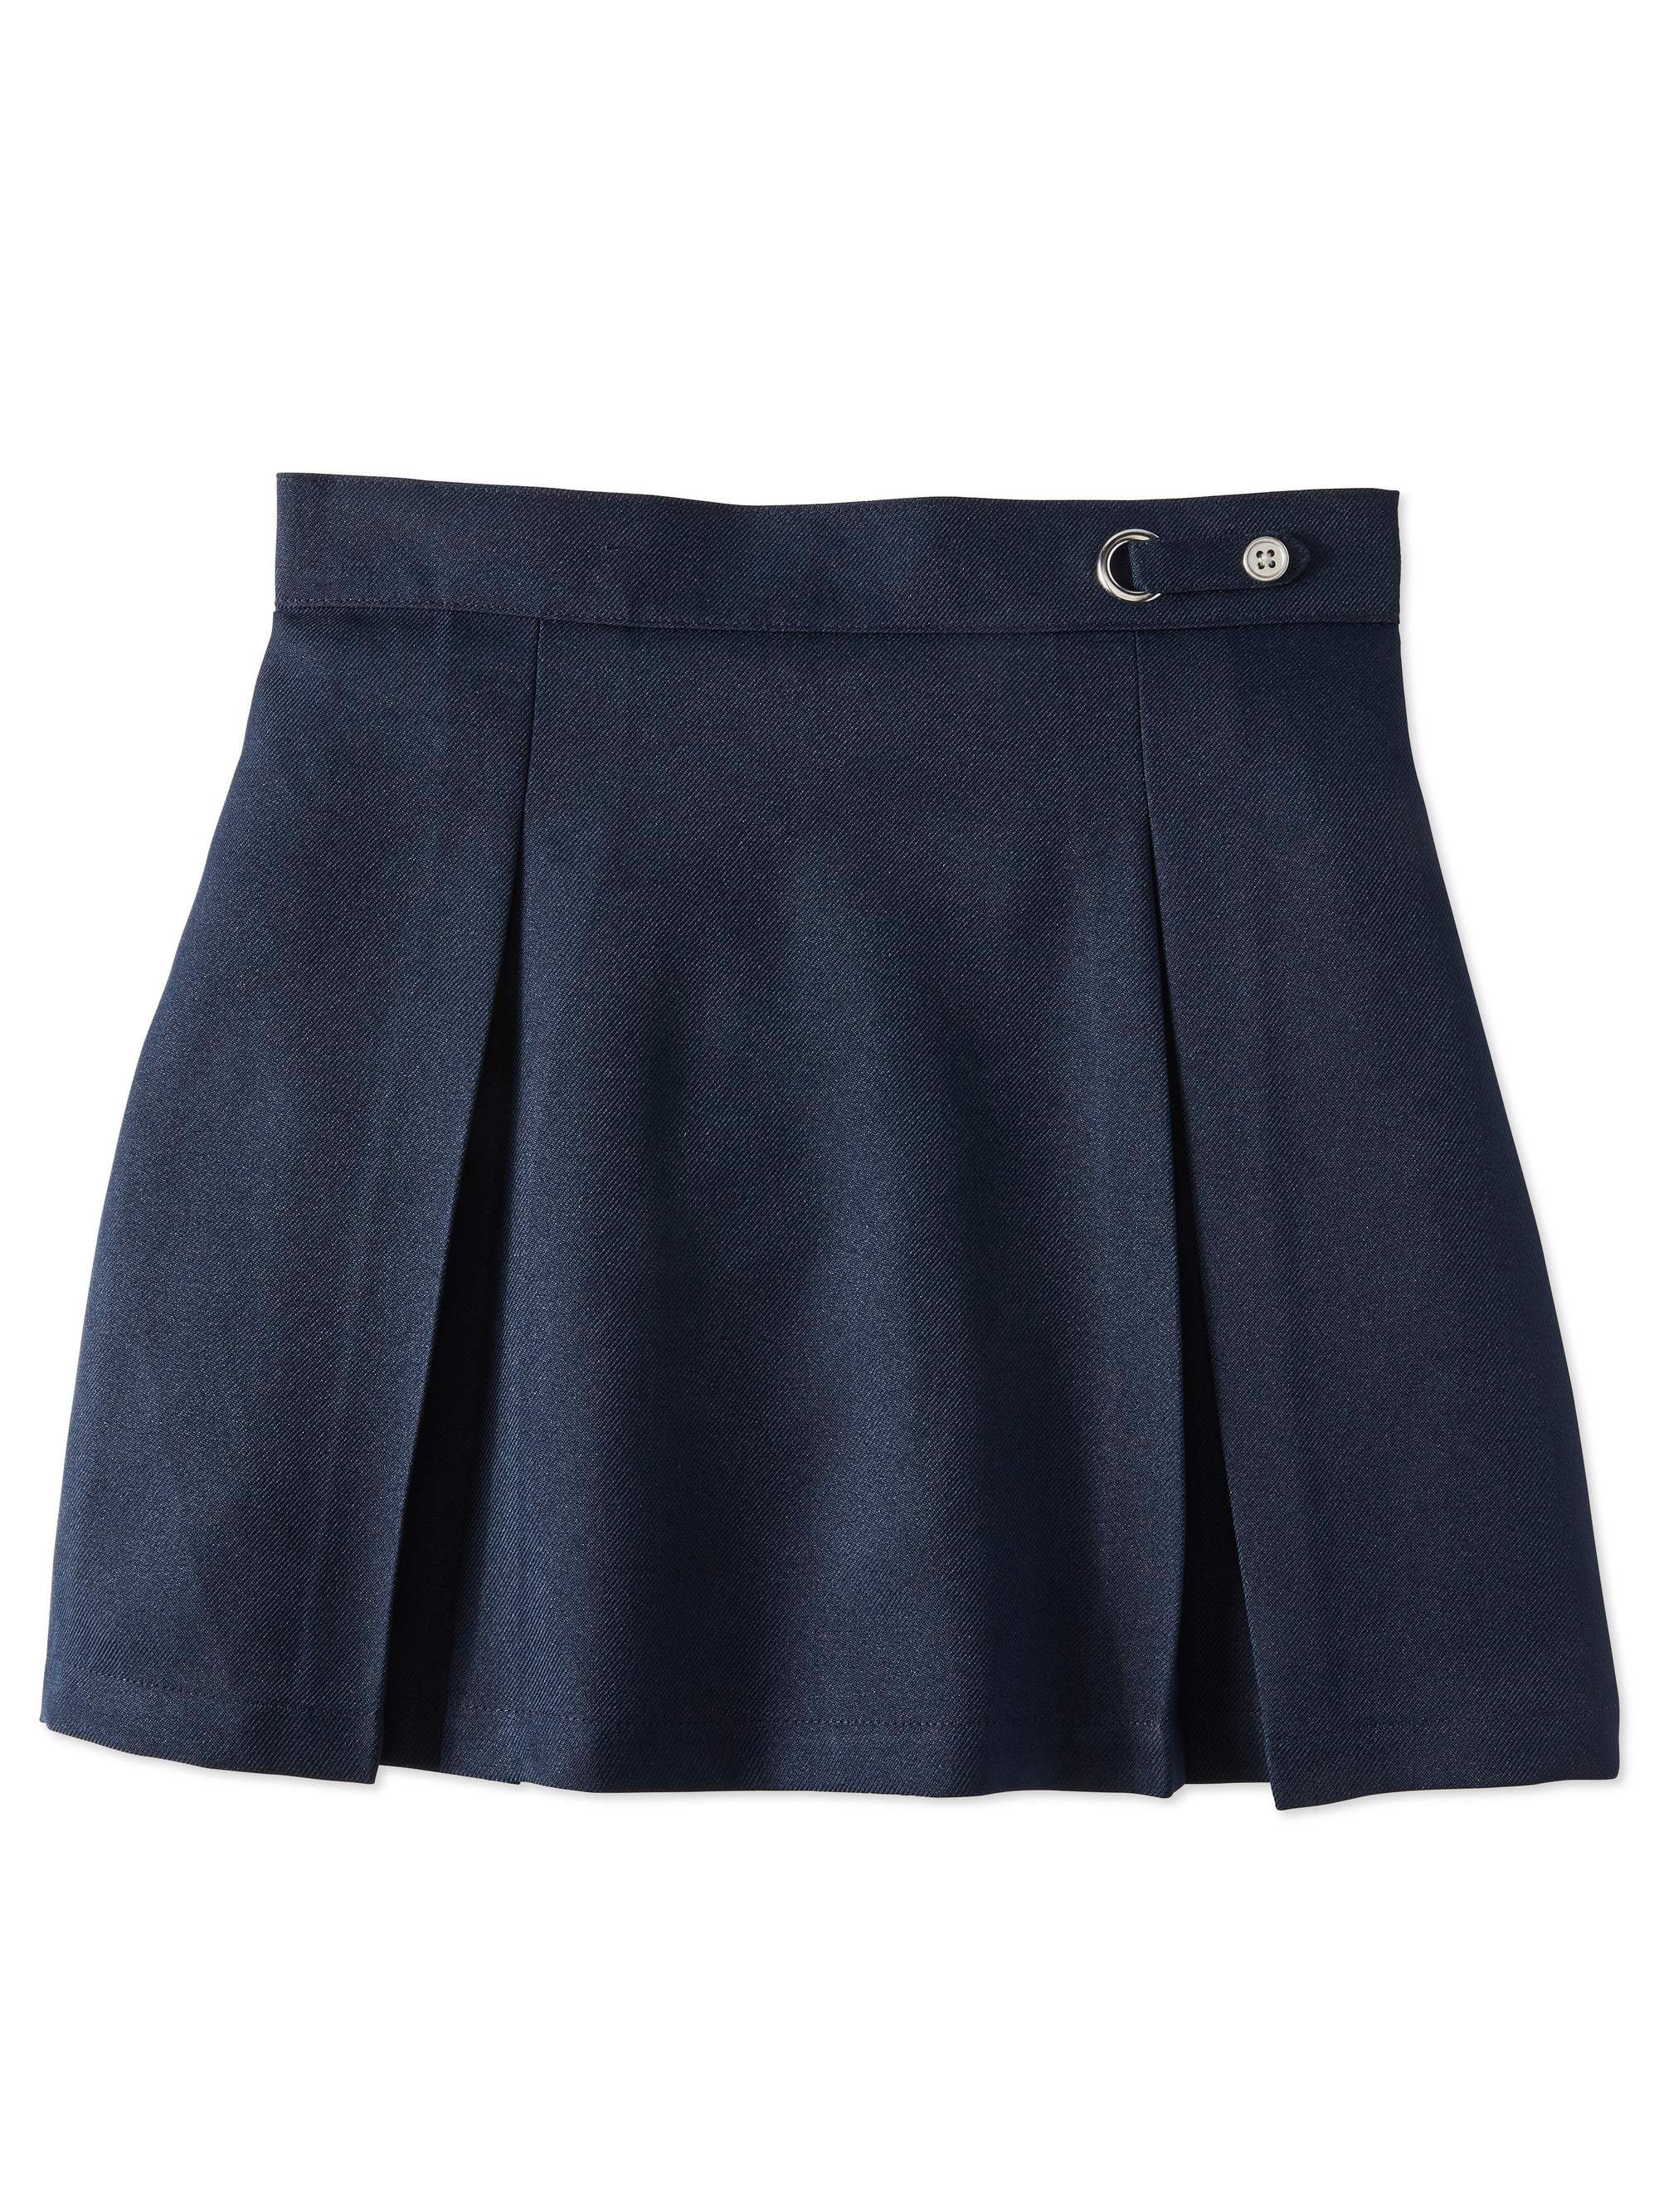 Wonder Nation Girls School Uniform Button Side Tab Scooter Skirt, Sizes 4-16 & Plus - image 1 of 4